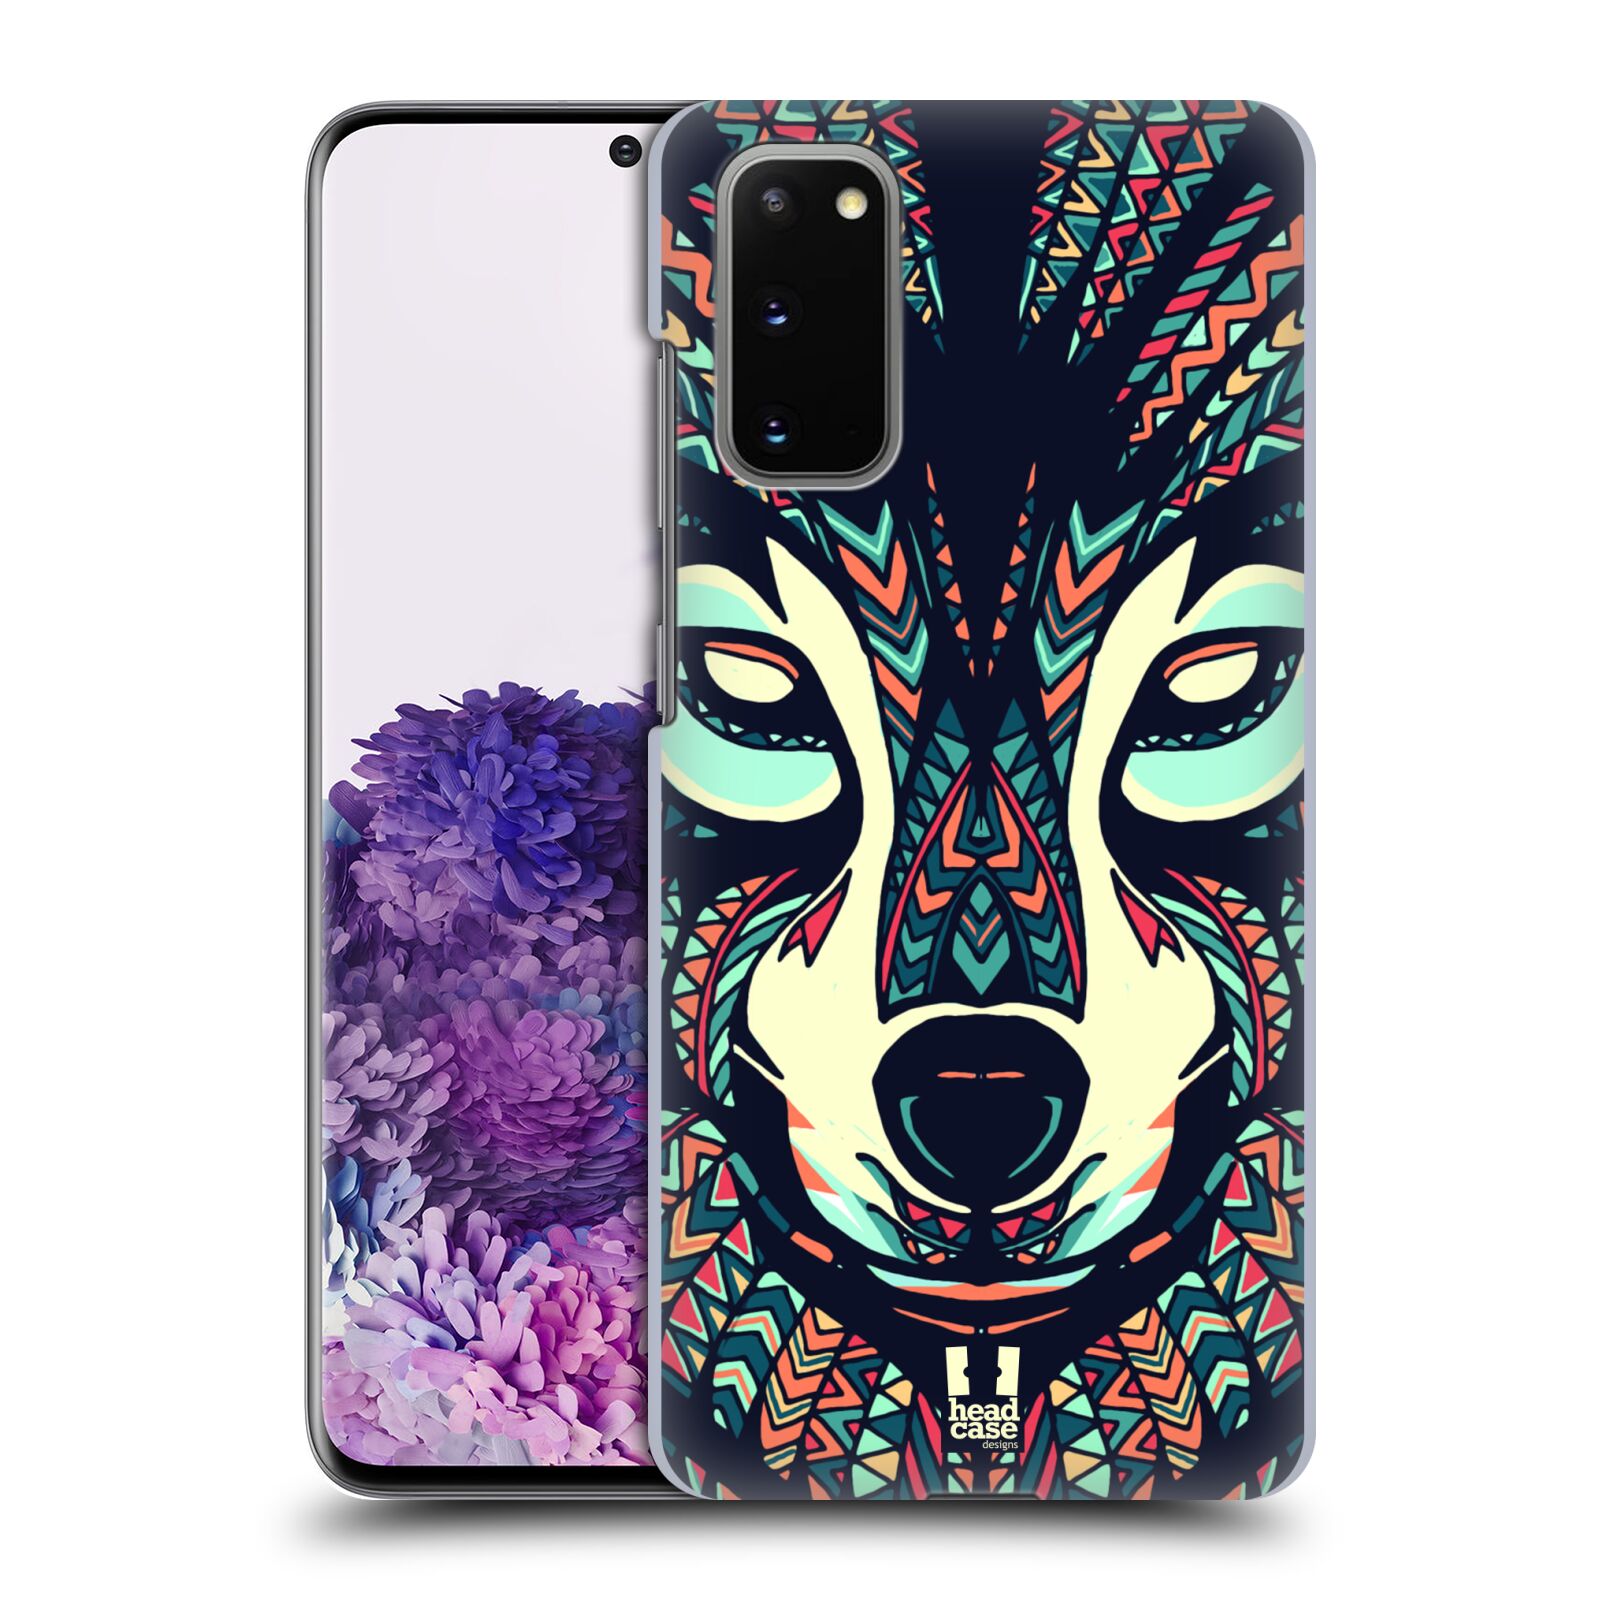 Pouzdro na mobil Samsung Galaxy S20 - HEAD CASE - vzor Aztécký motiv zvíře 3 vlk